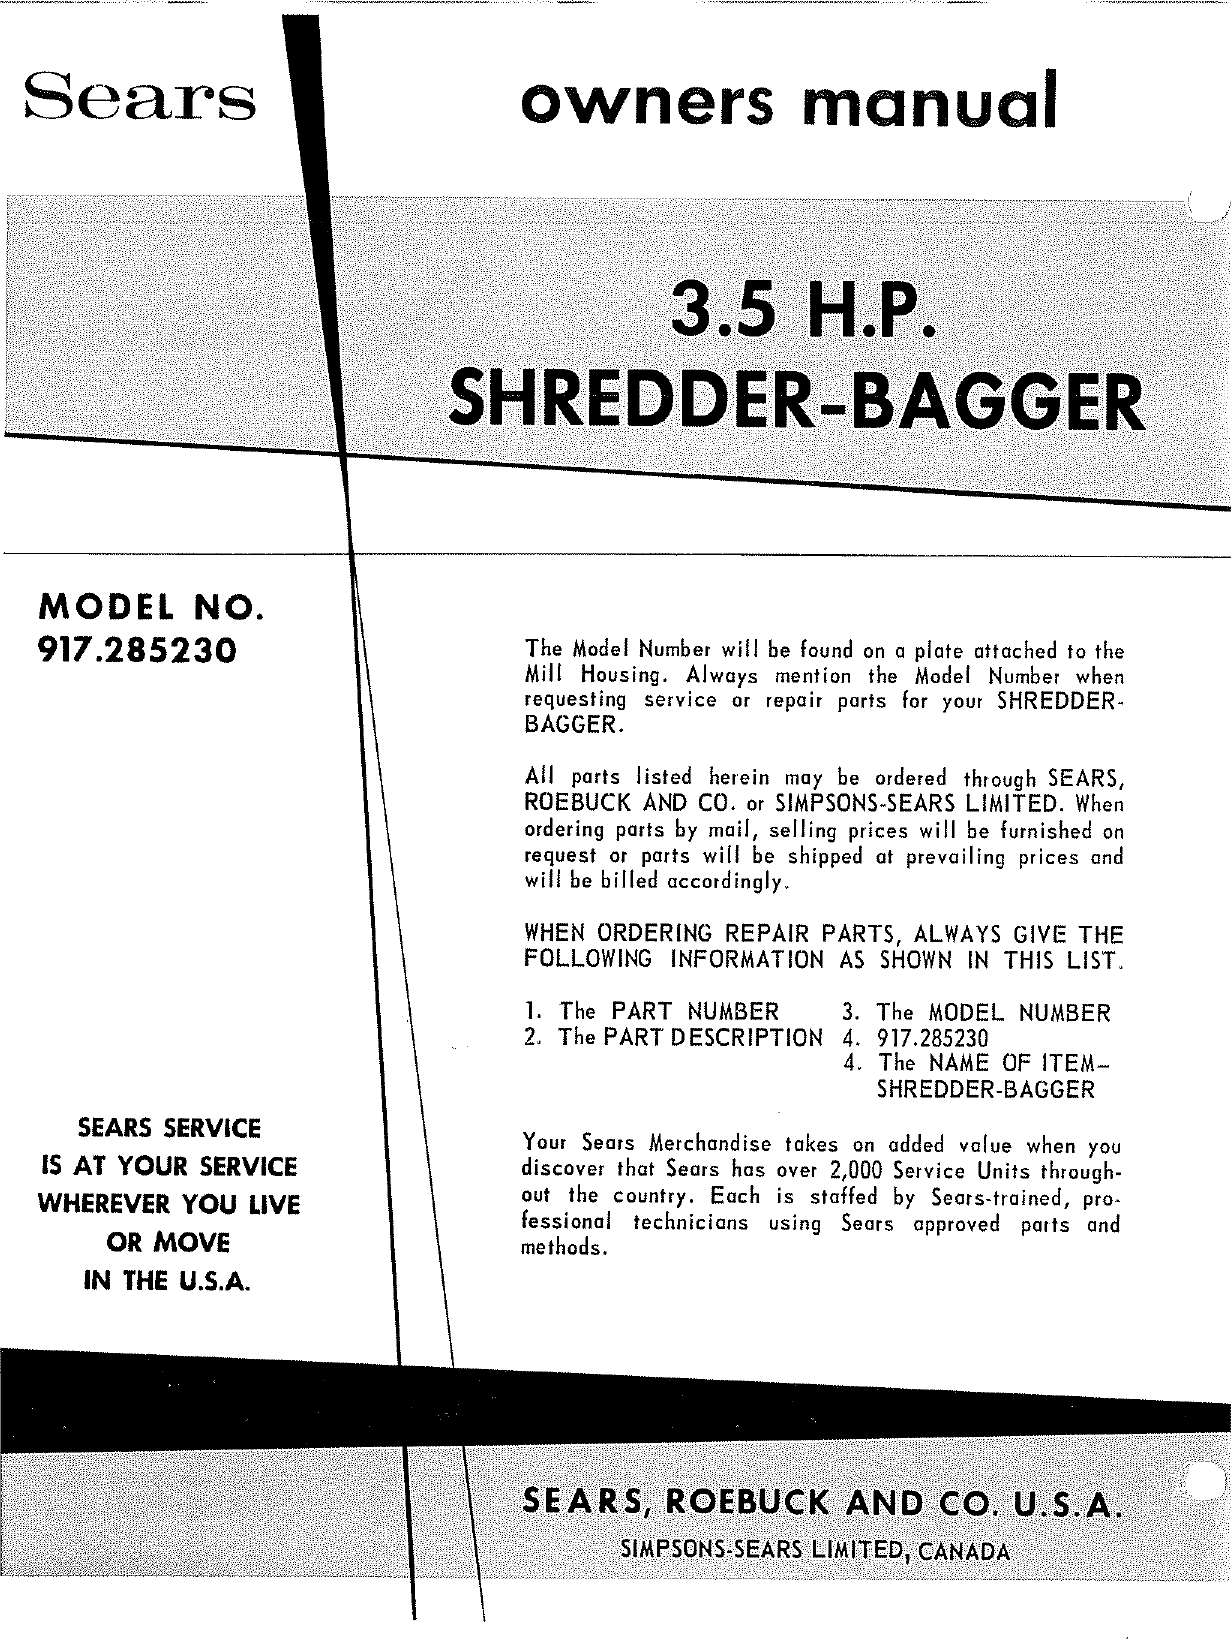 Craftsman 917285230 User Manual SEARS SHREDDER BAGGER Manuals And ...